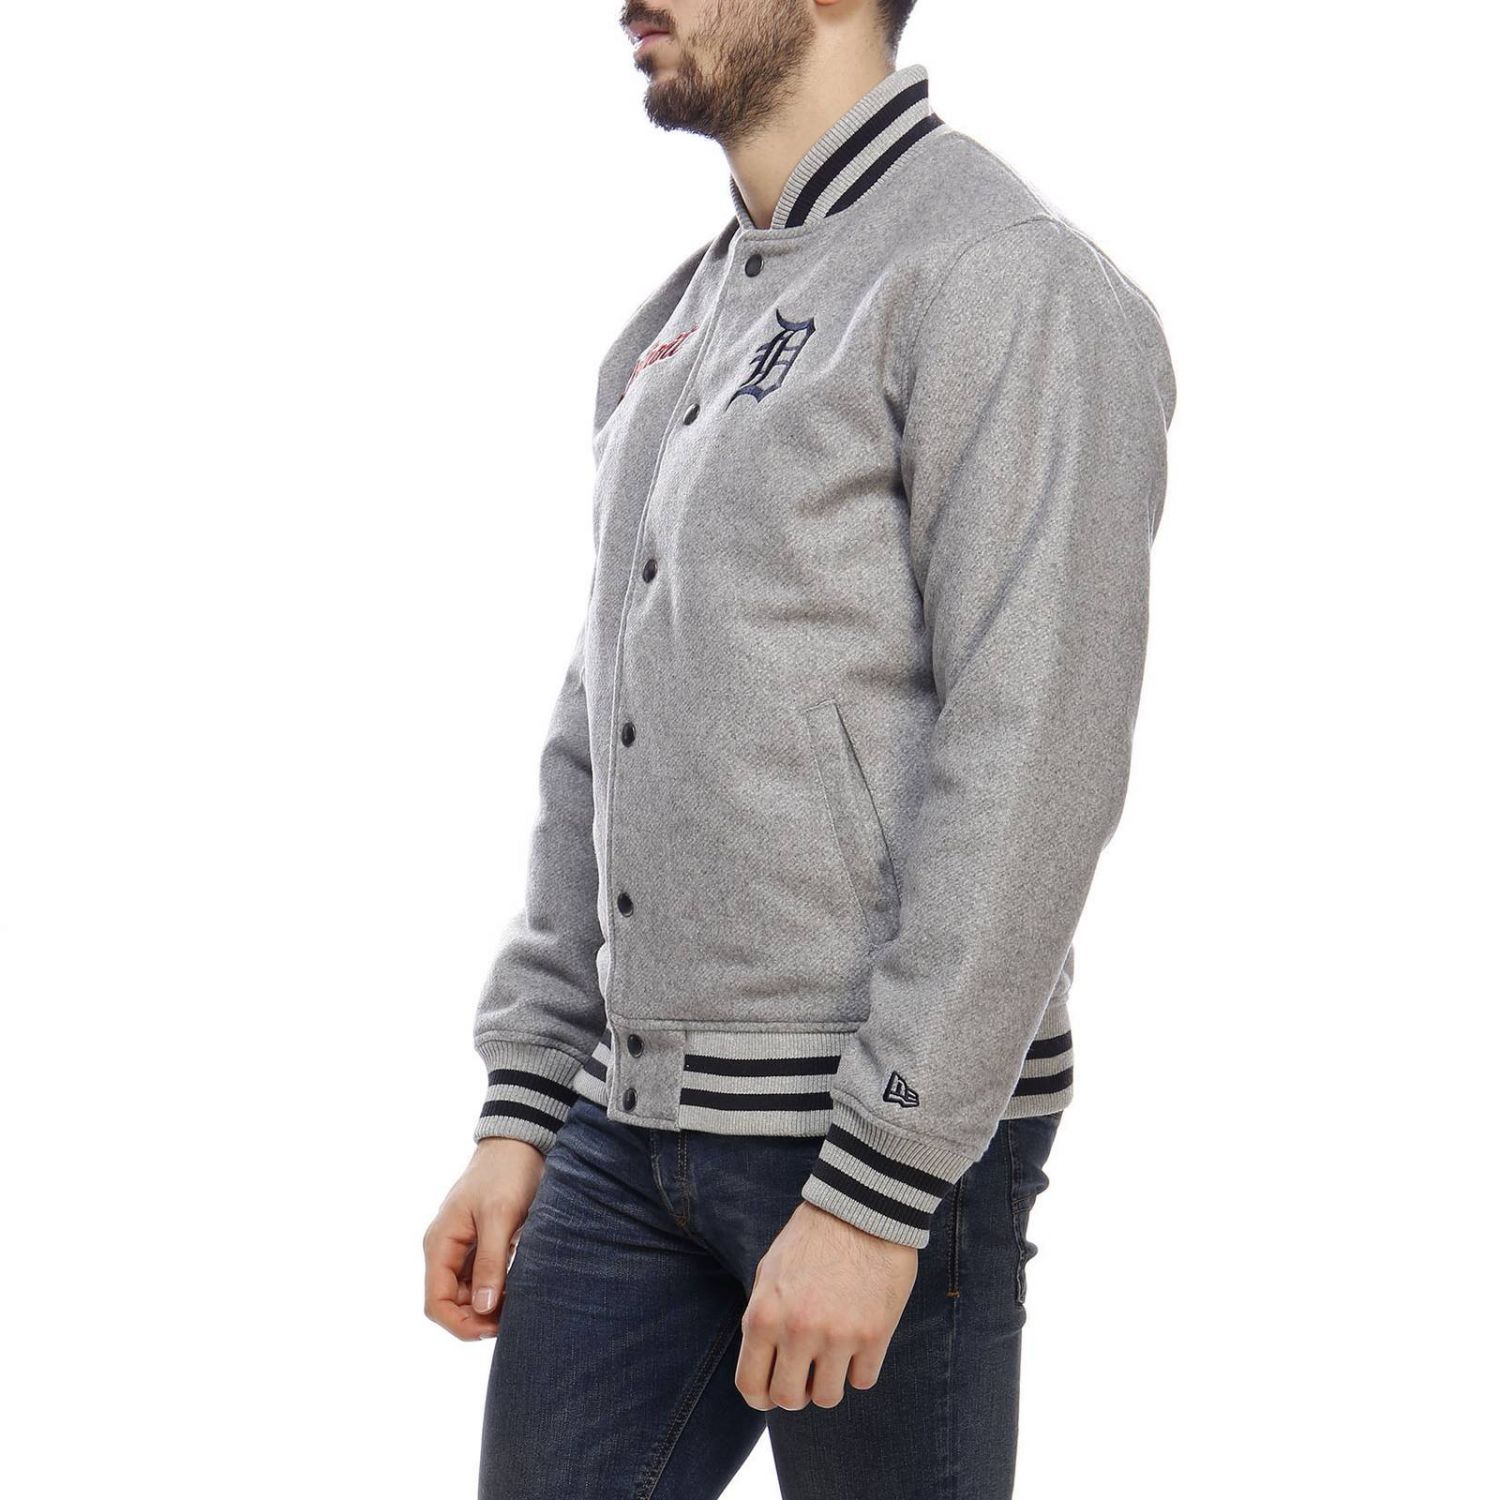 New Era Outlet: jacket for man - Grey | New Era jacket 11788931 online ...